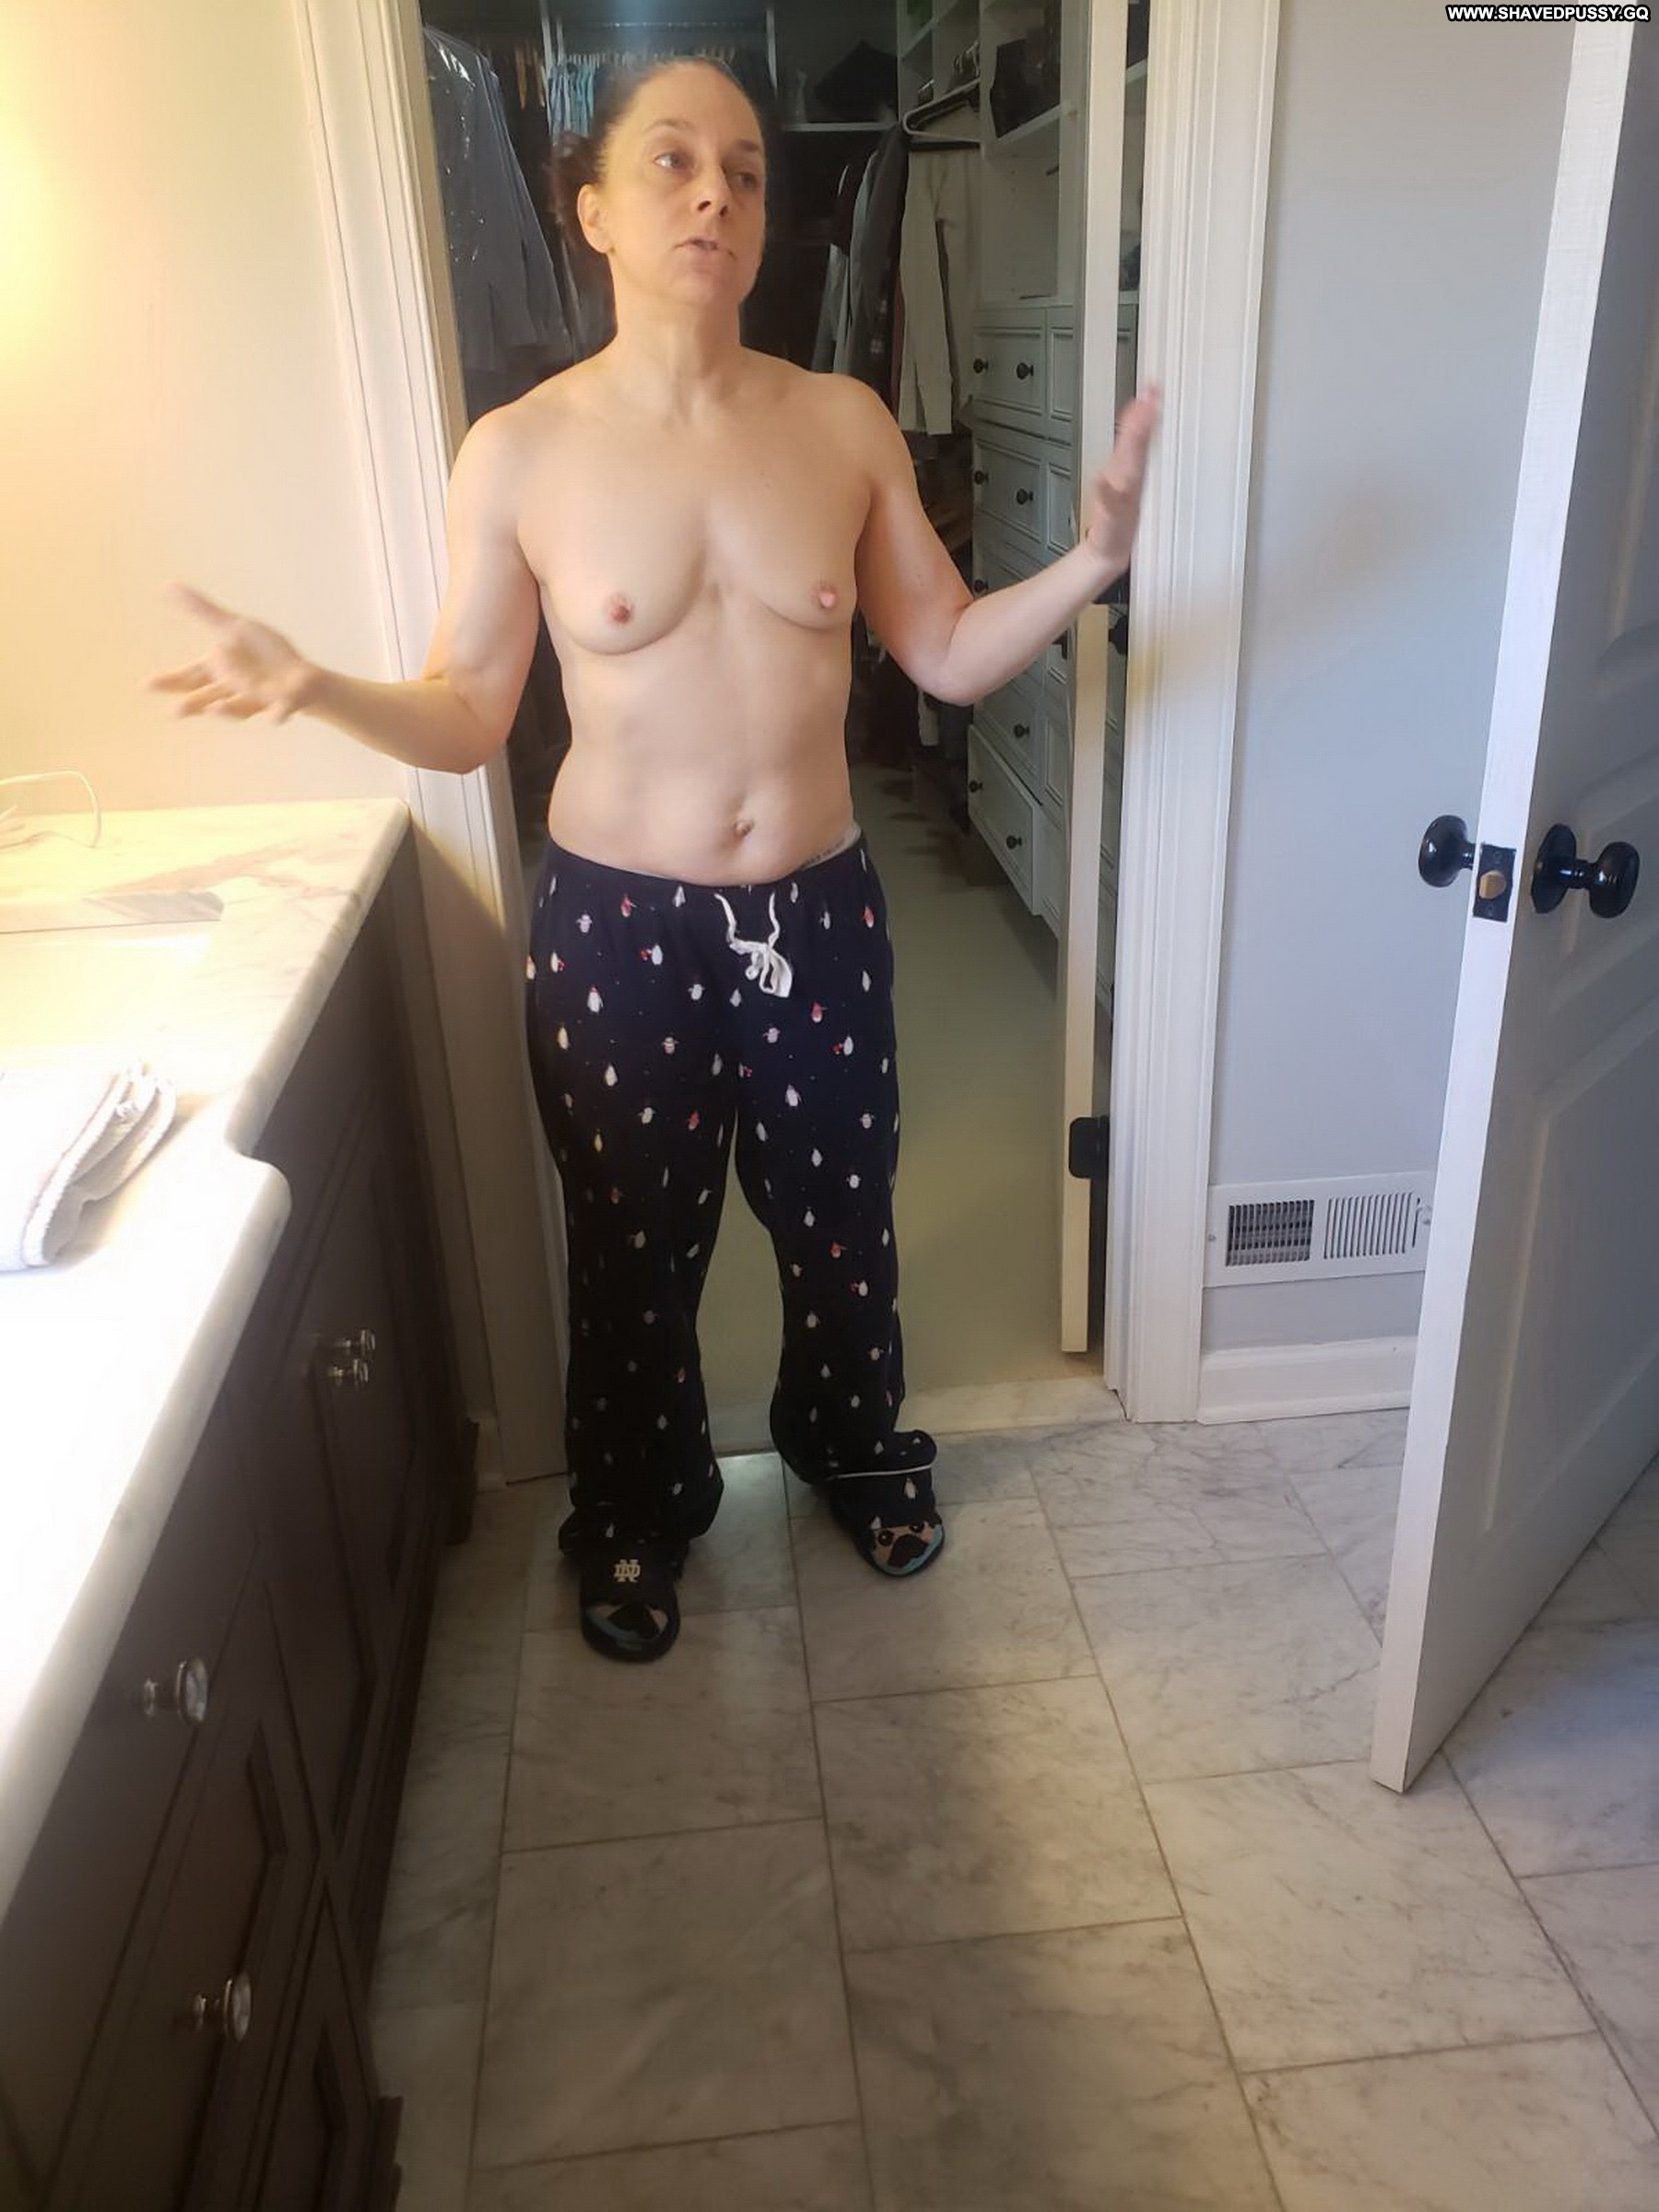 Dena Underwear Nude Wife Fit Hot Vagina Xxx Bra Pictures pic photo